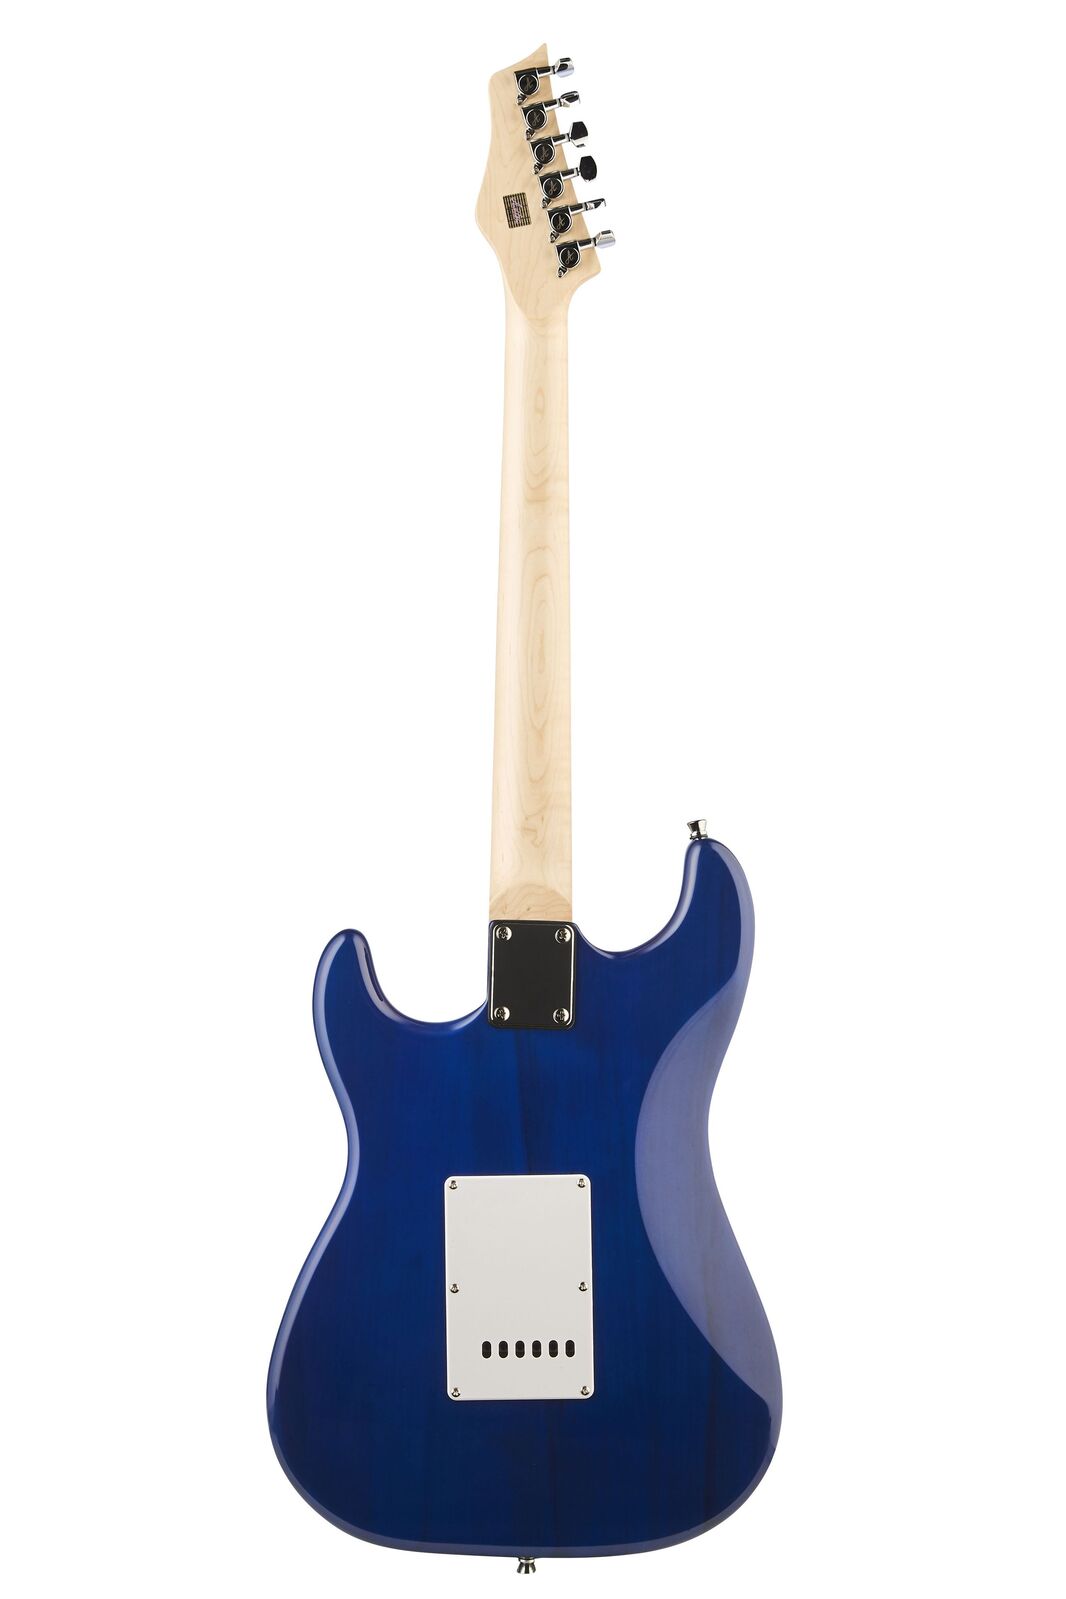 The Ashton AG232TDB Electric Guitar in Blue